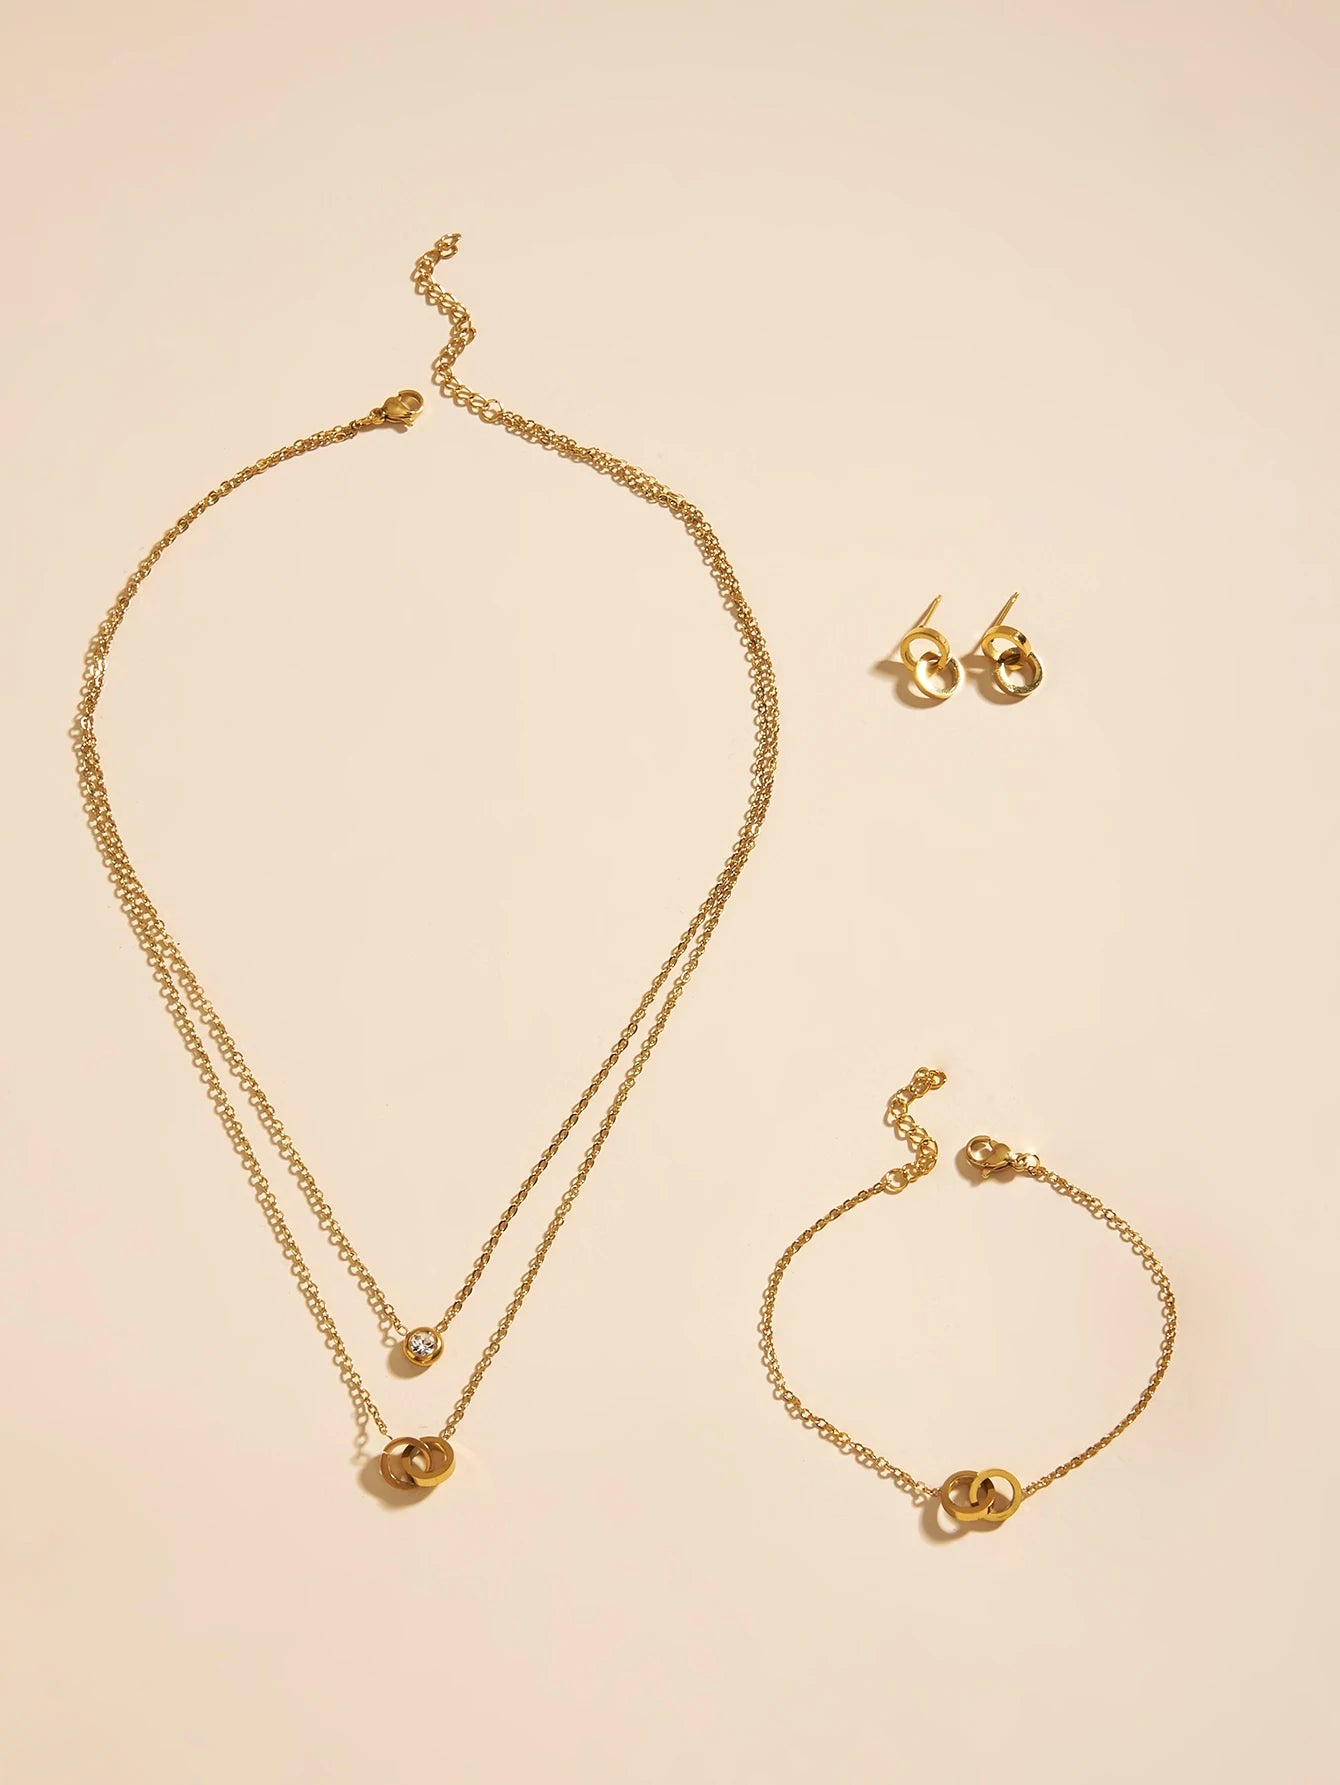 4 Piece women's Stainless Steel Double Loop Buckle Overlay Wear Necklace Bracelet Earrings Birthday Christmas Party Date Gift